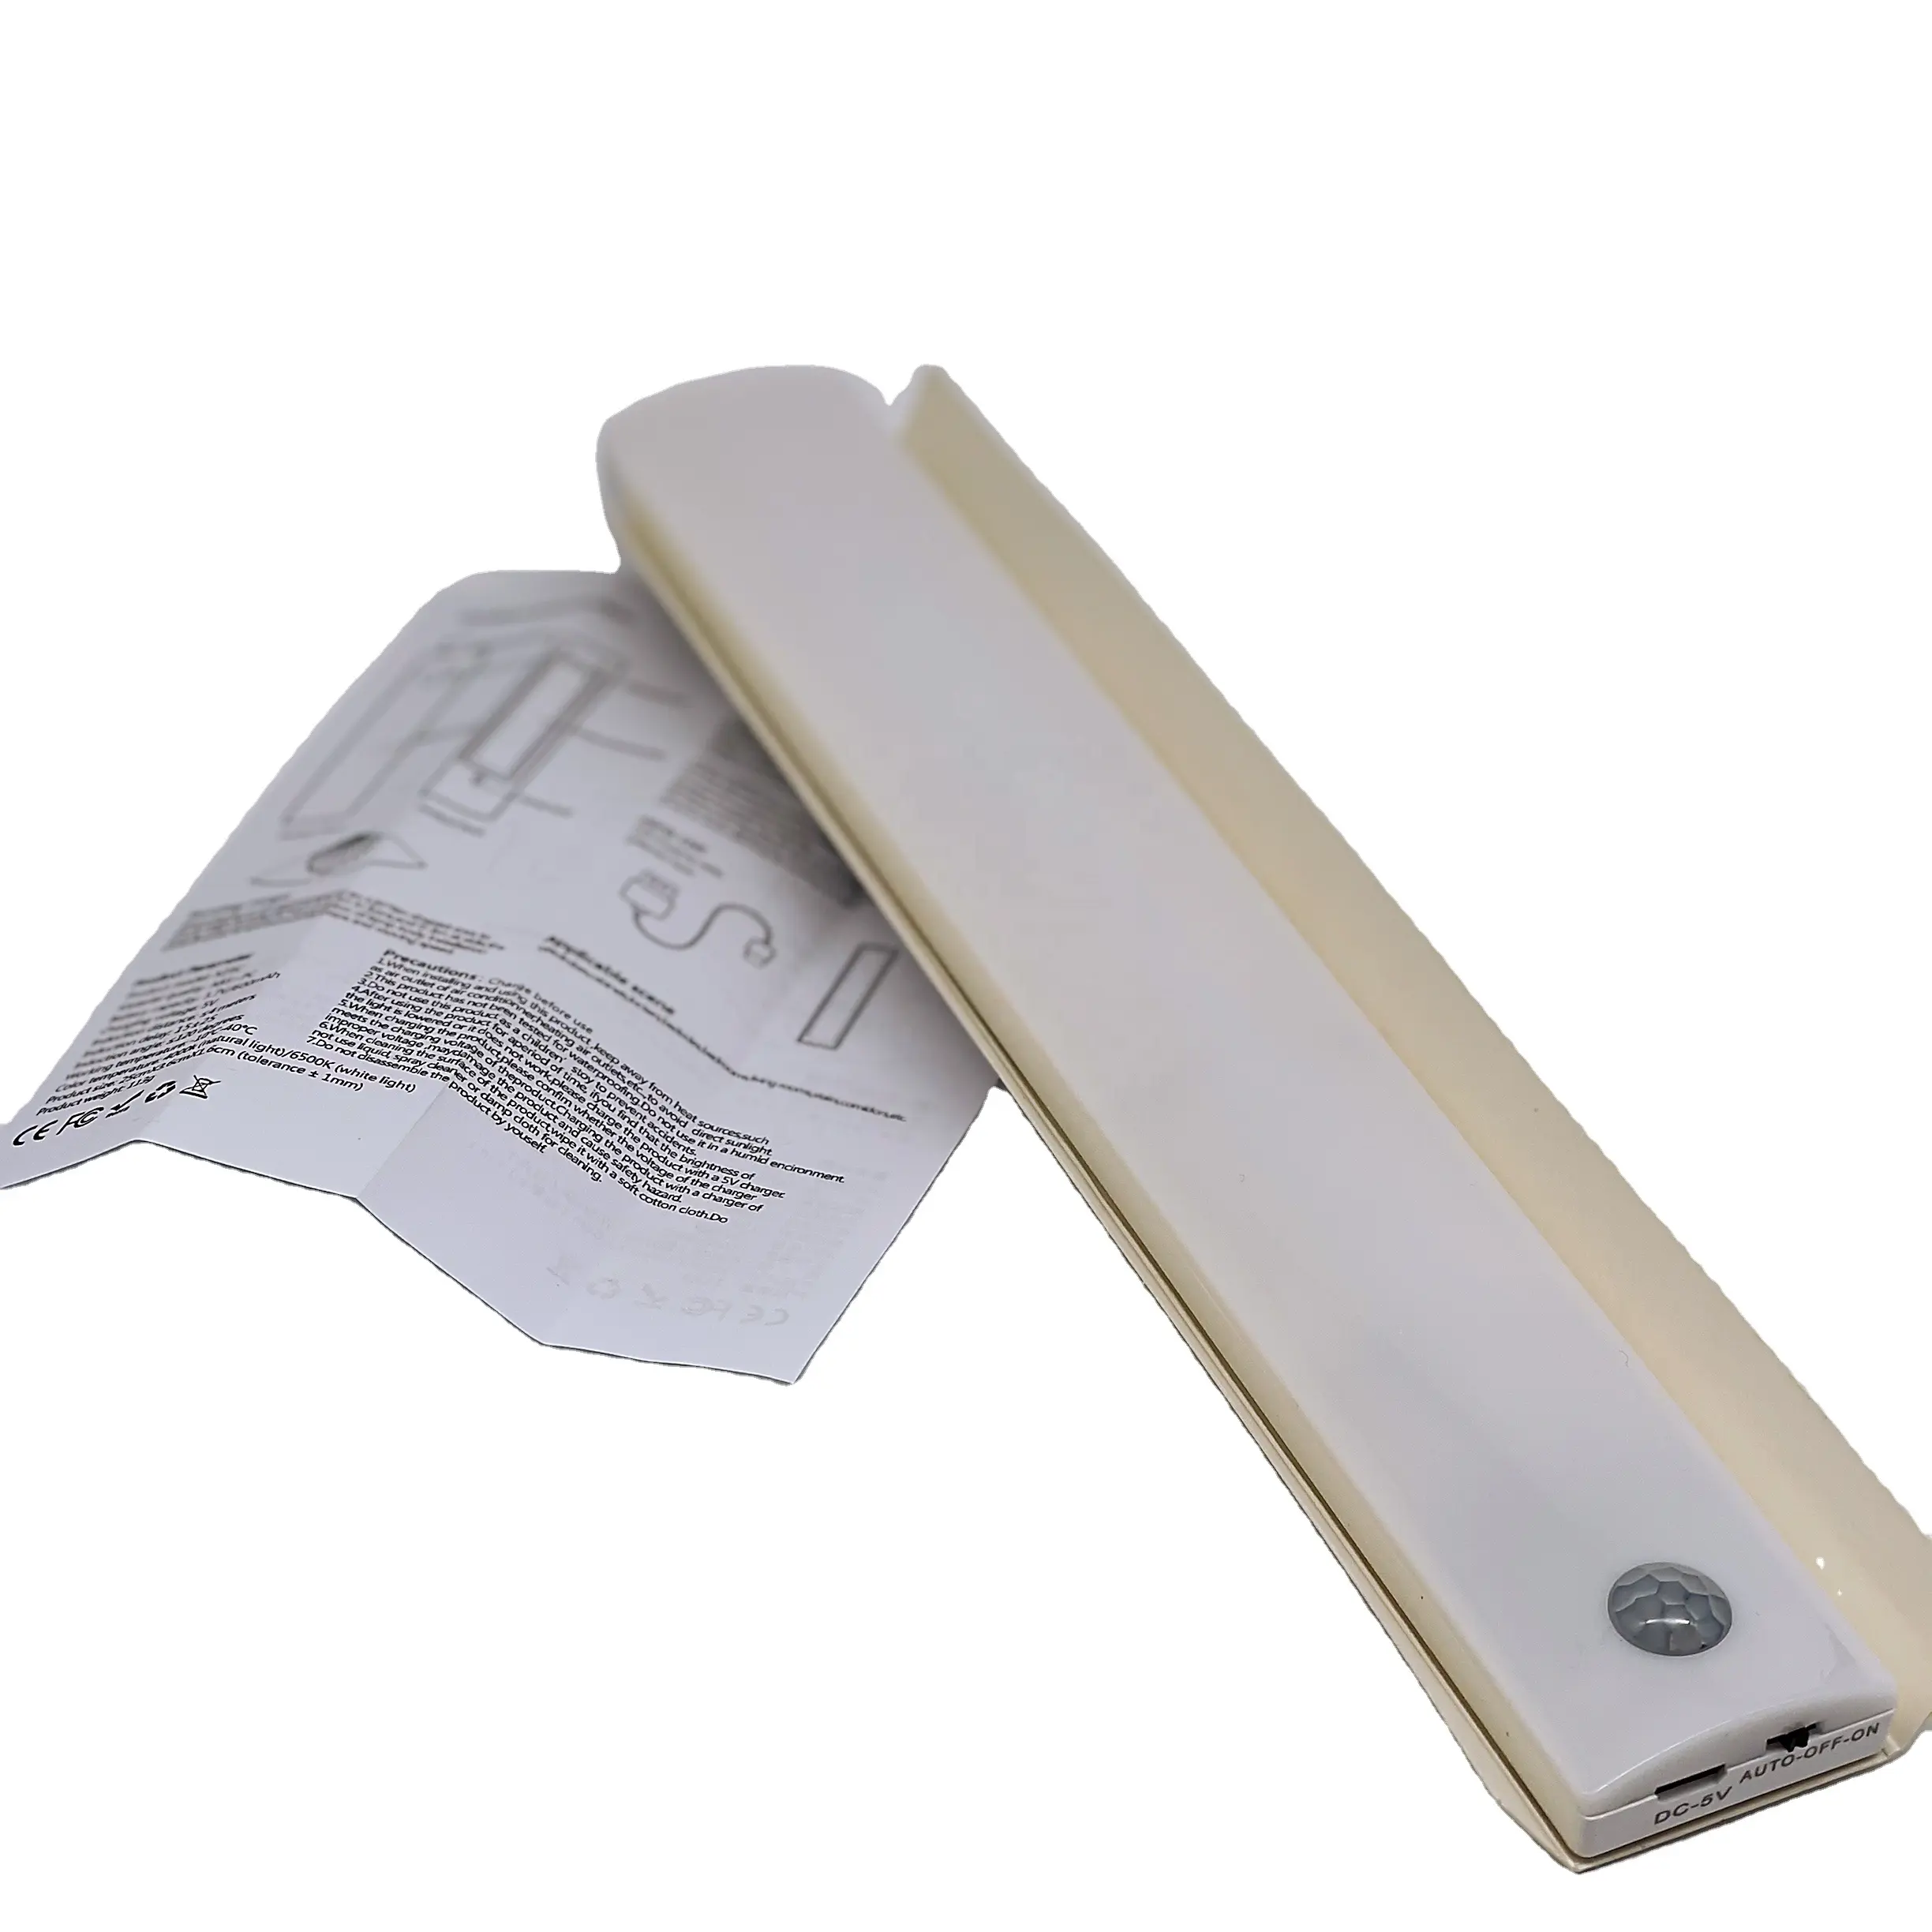 LED נטענת Motion חיישן לילה אור Pir עם מקל-על מגנטי רצועת עבור ארון מלתחת ארון דלת מתג 2 צבע אמבטיה